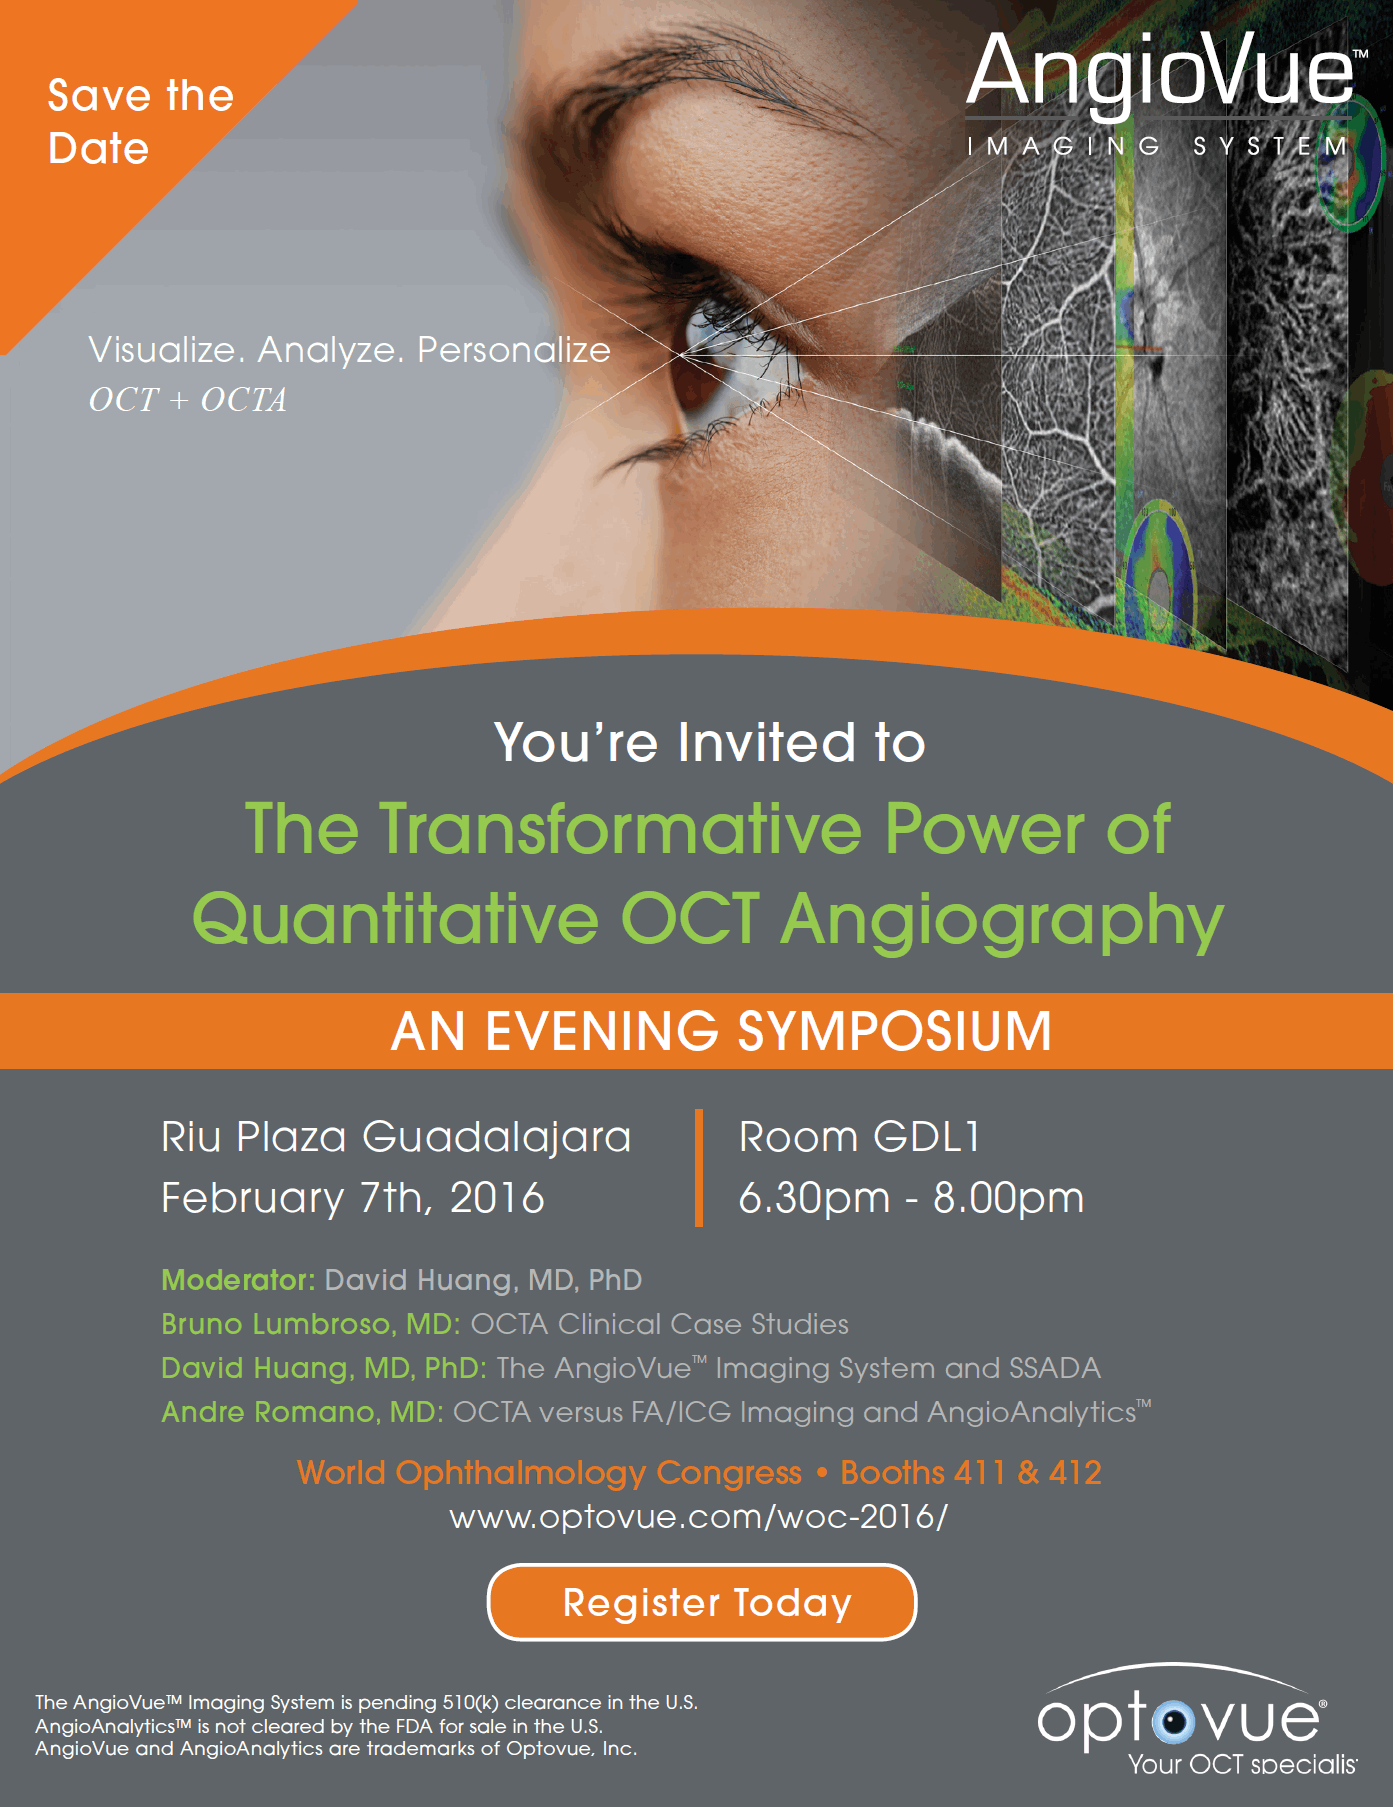 The Transformative Power of Quantitative OCT Angiography